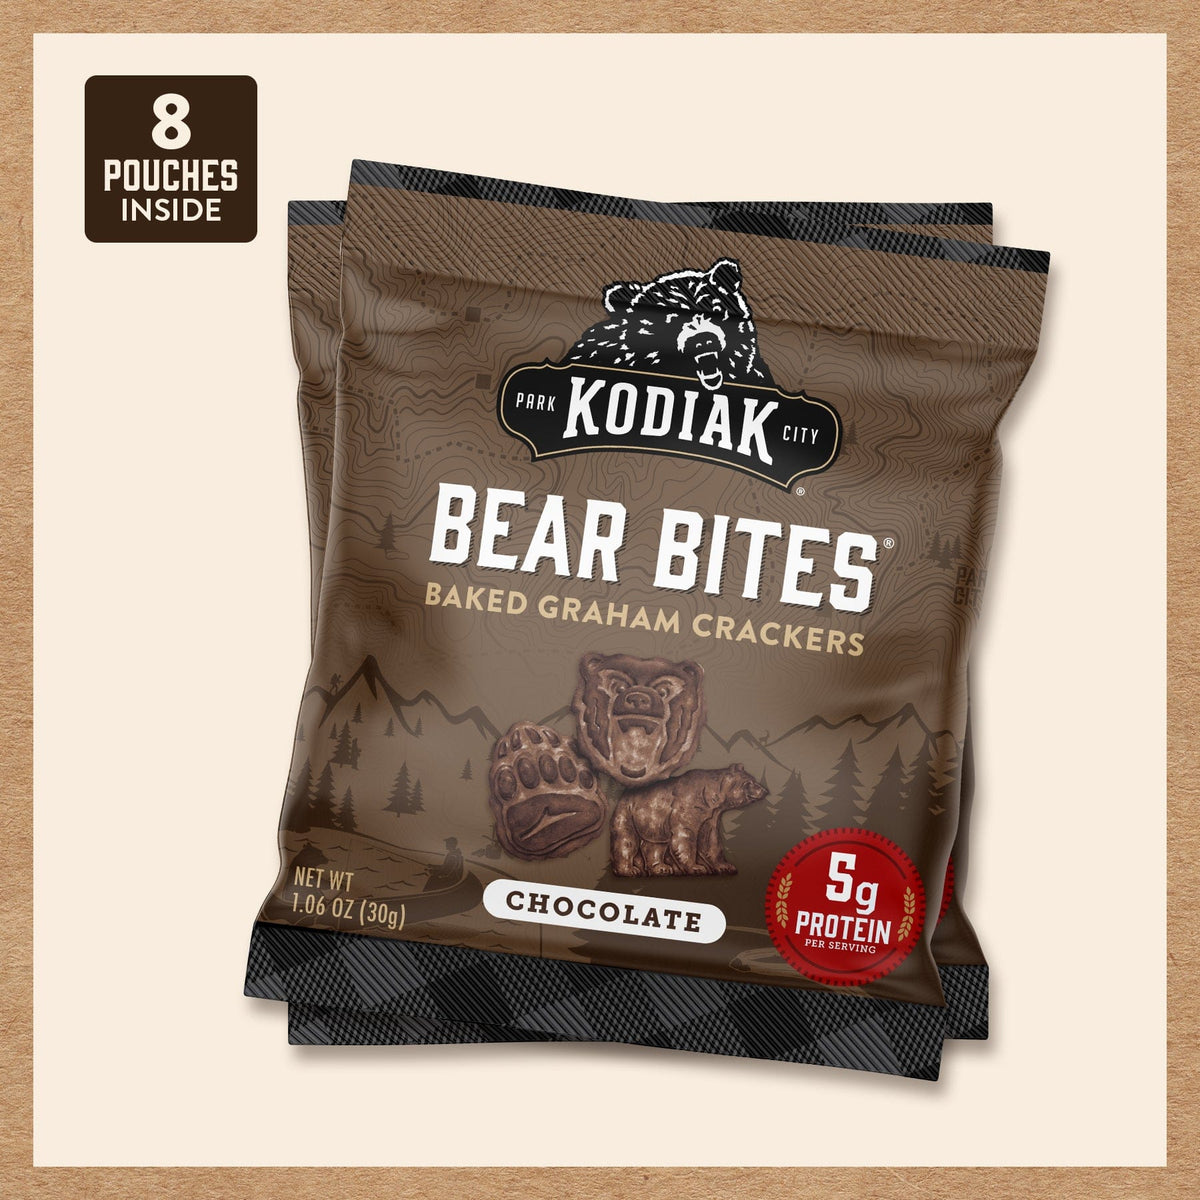 Kodiak Cakes Bear Bites Crackers, Graham, Chocolate, 8 Pack - 8 pack, 1.06 oz packs